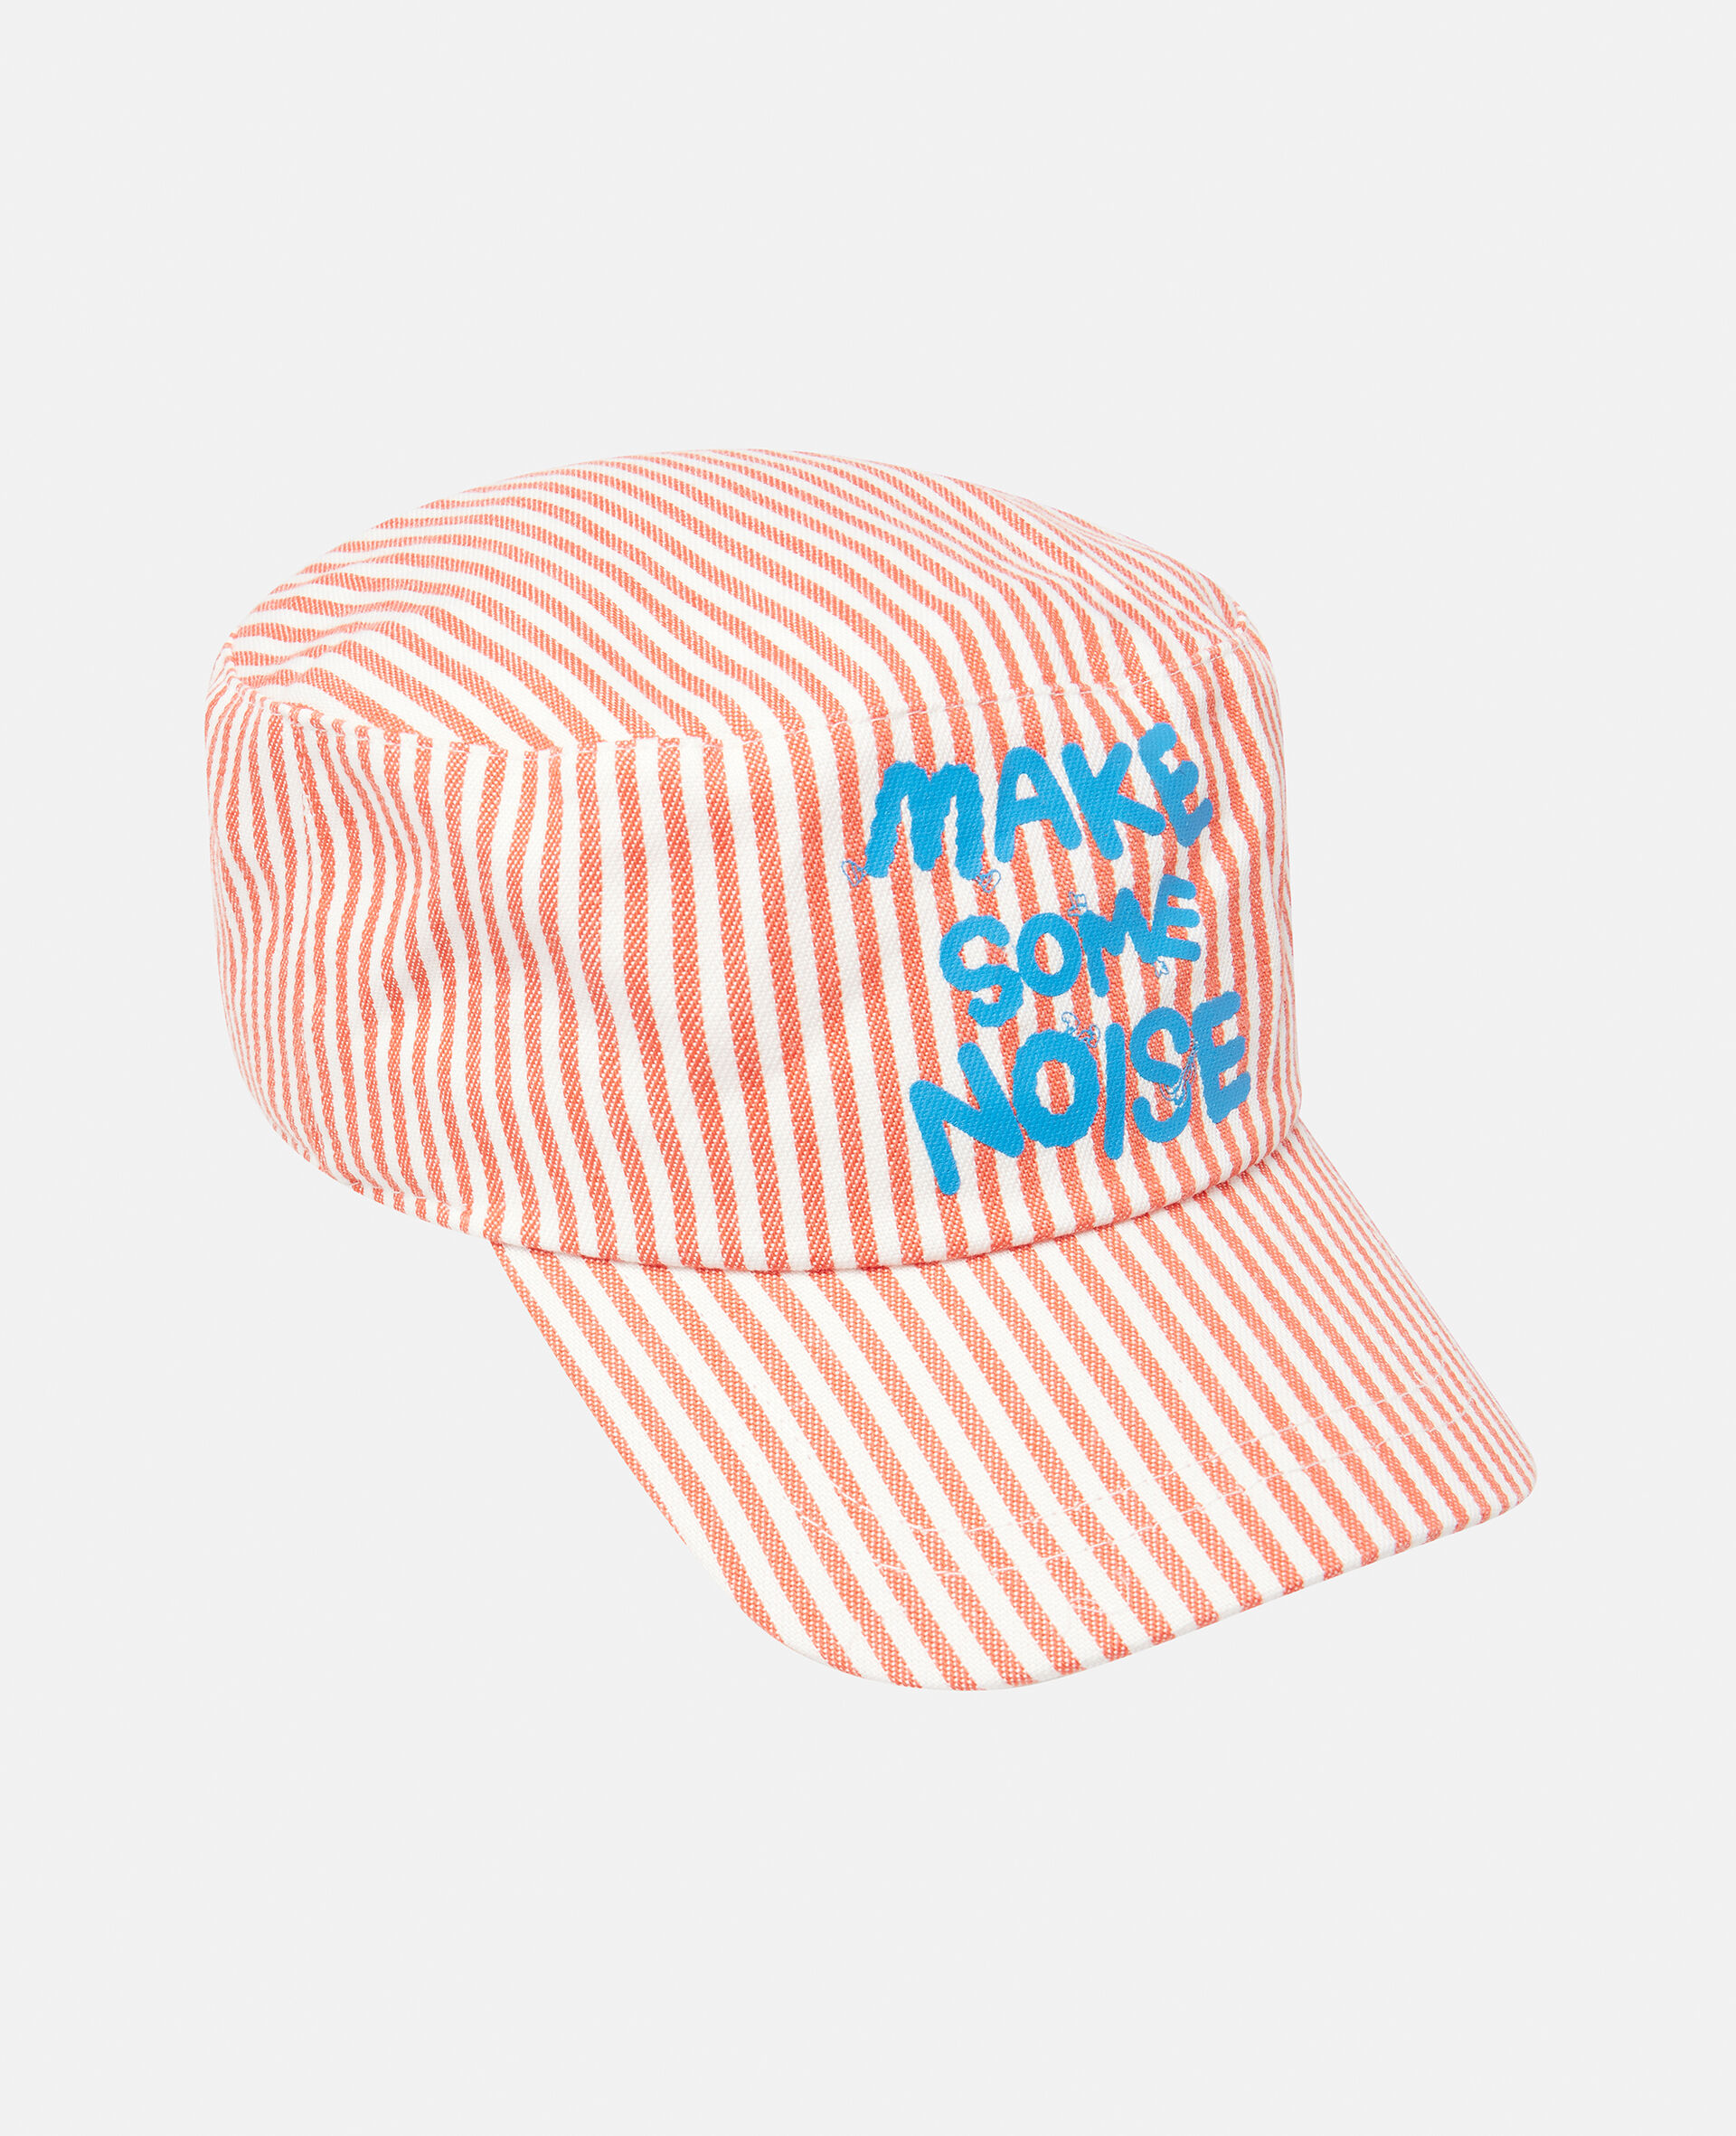 'Make Some Noise' Striped Baseball Cap-Multicolour-large image number 1